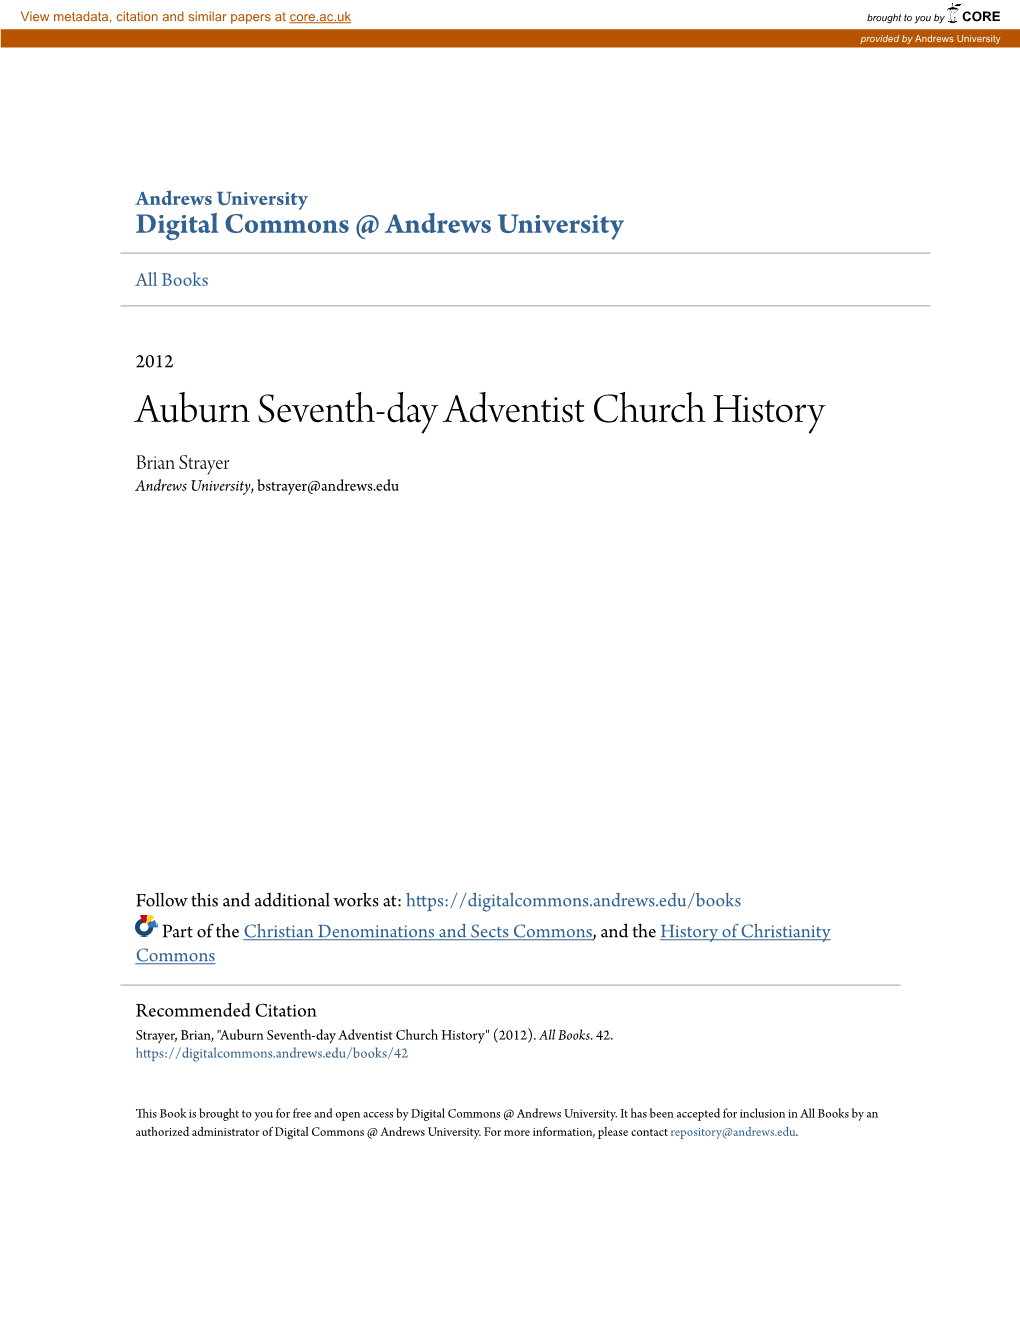 Auburn Seventh-Day Adventist Church History Brian Strayer Andrews University, Bstrayer@Andrews.Edu